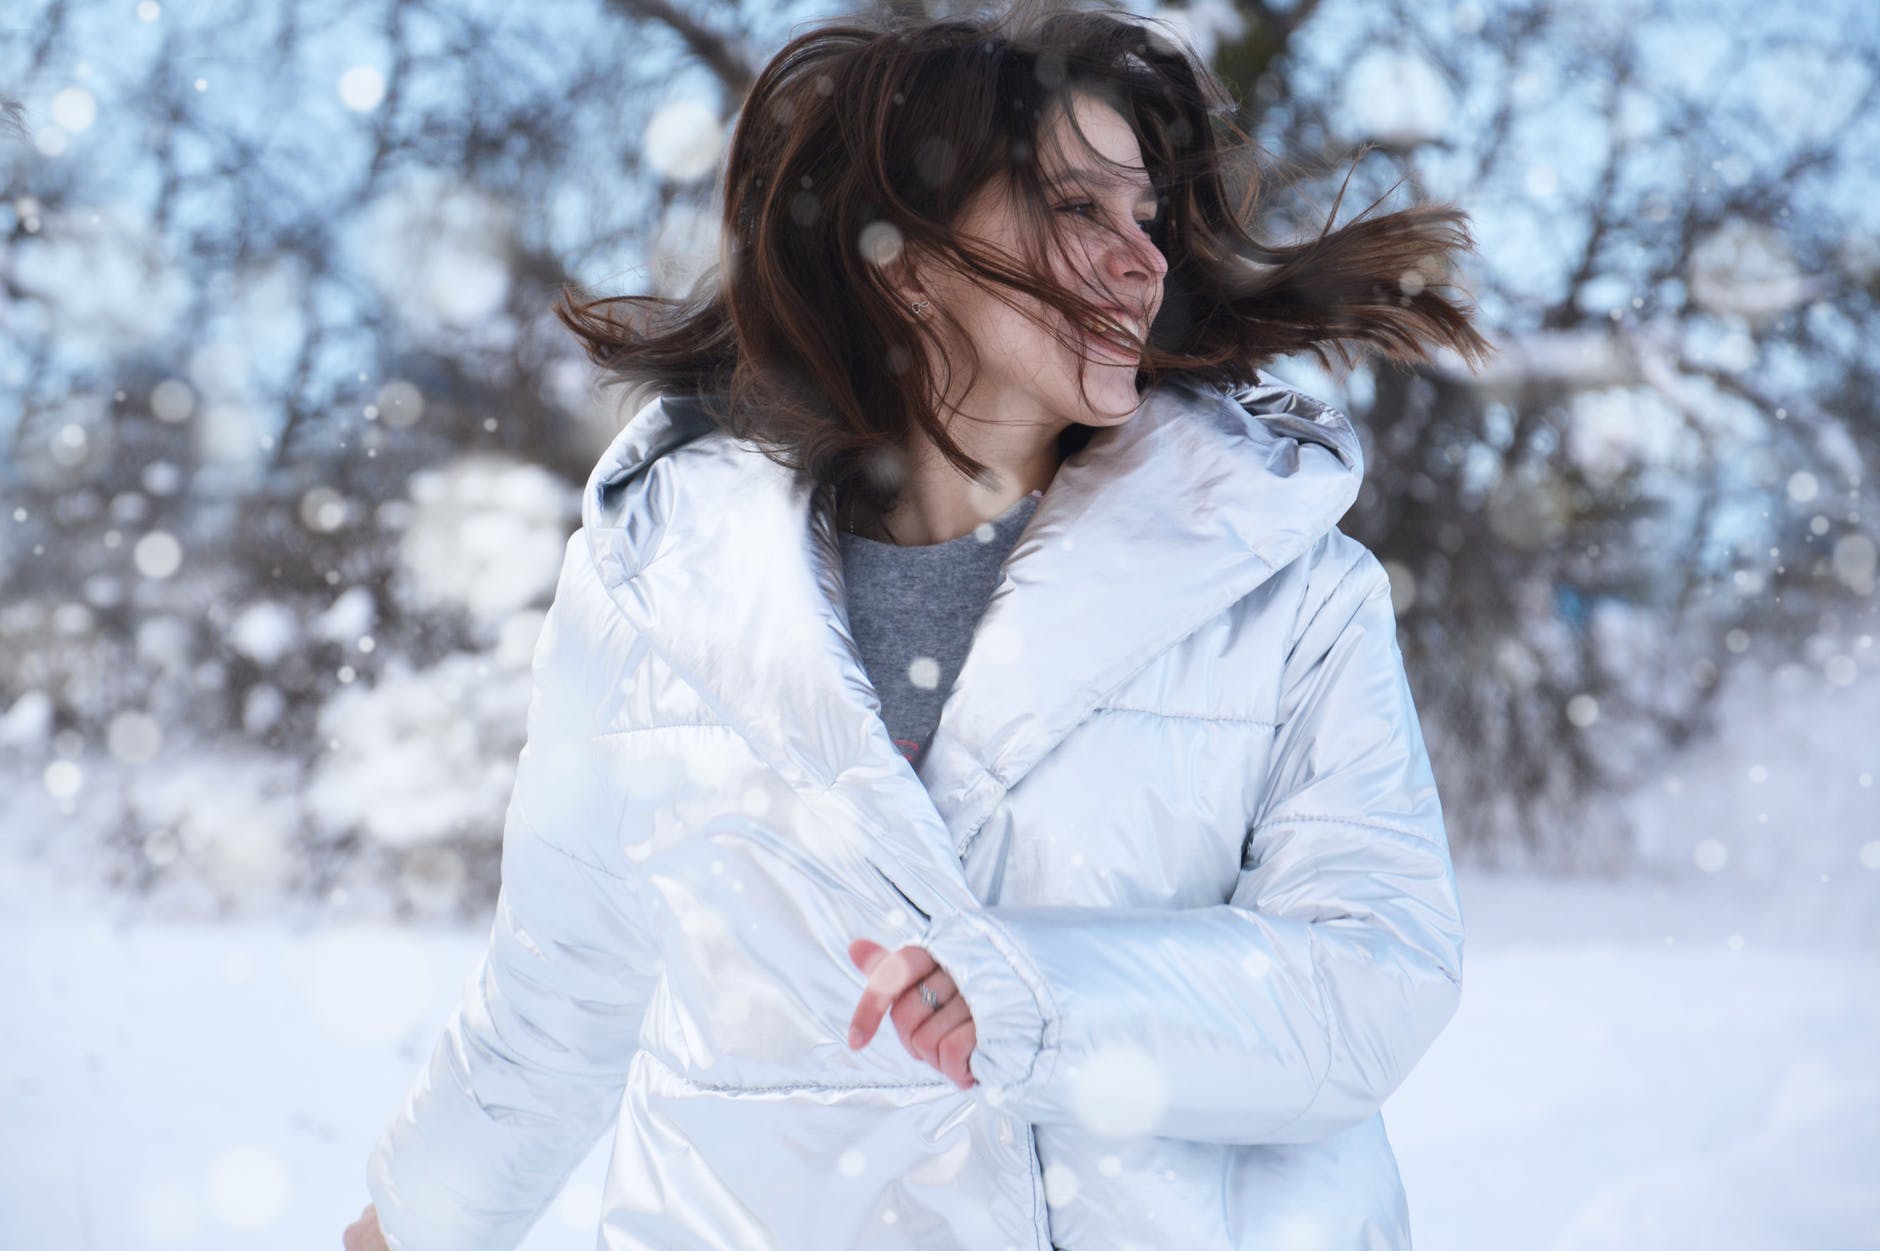 women s white winter coat fashion fashionable winter style tips fashionably warm this winter 